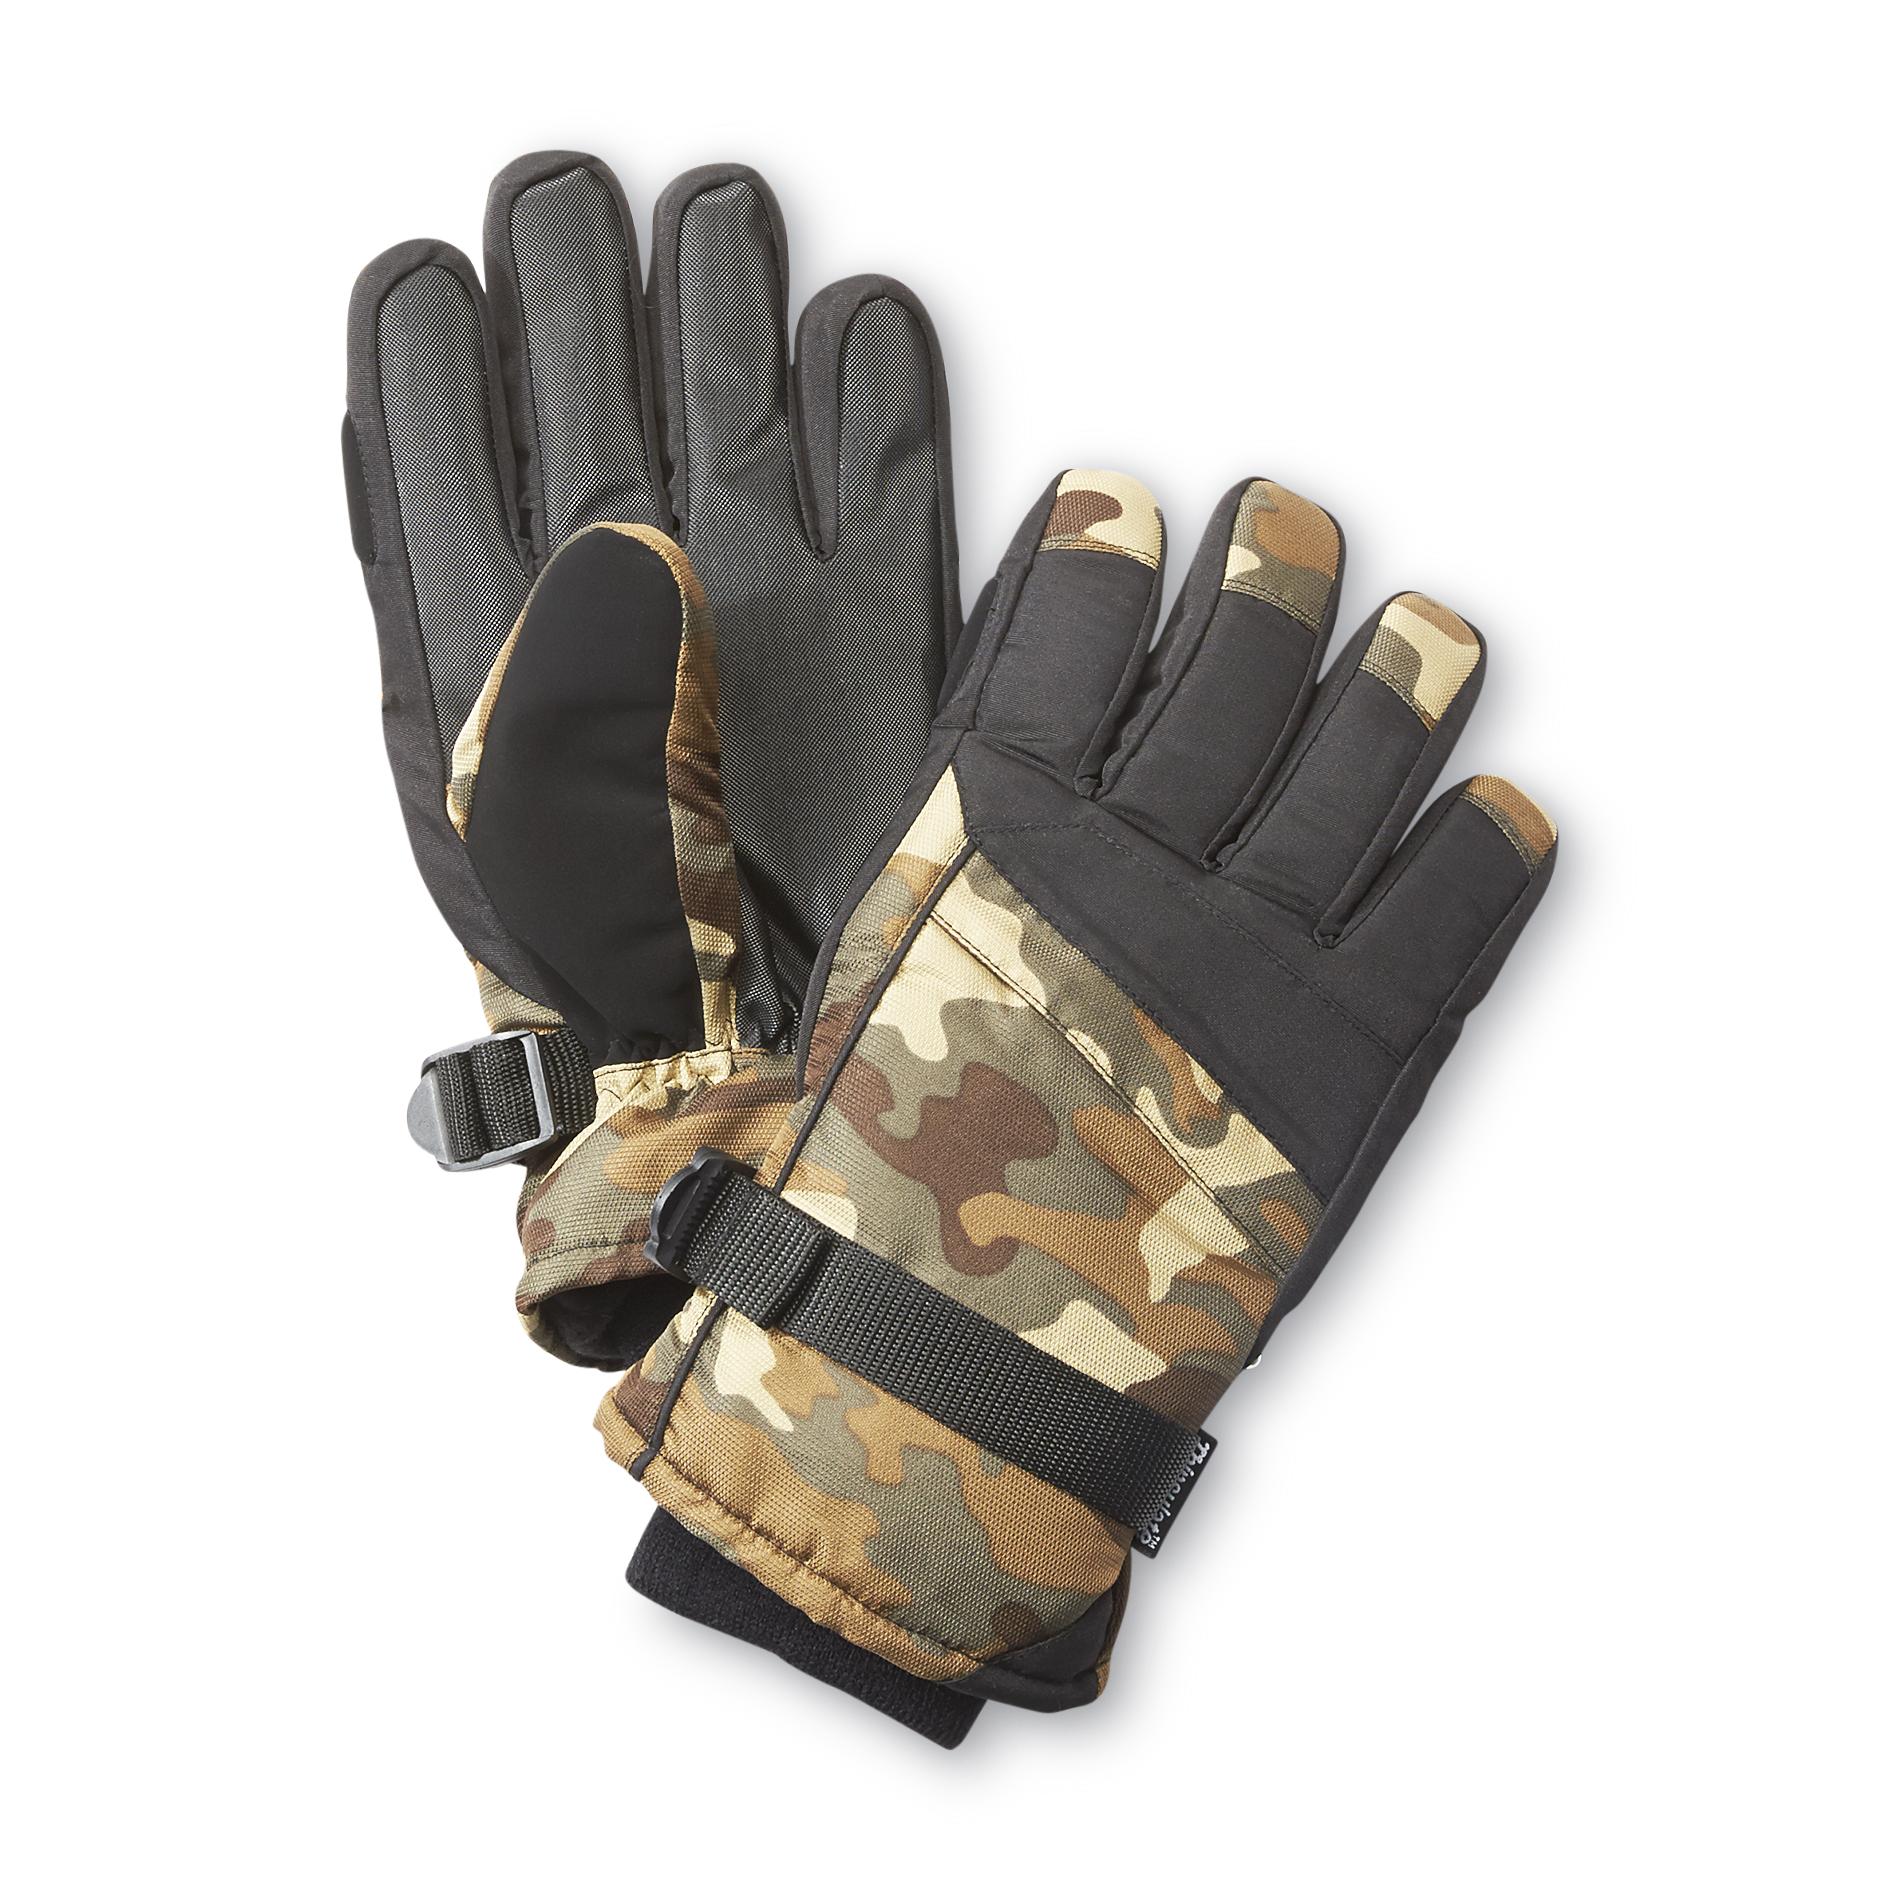 Athletech Men's Thinsulate Fleece Lined Ski Gloves - Camouflage